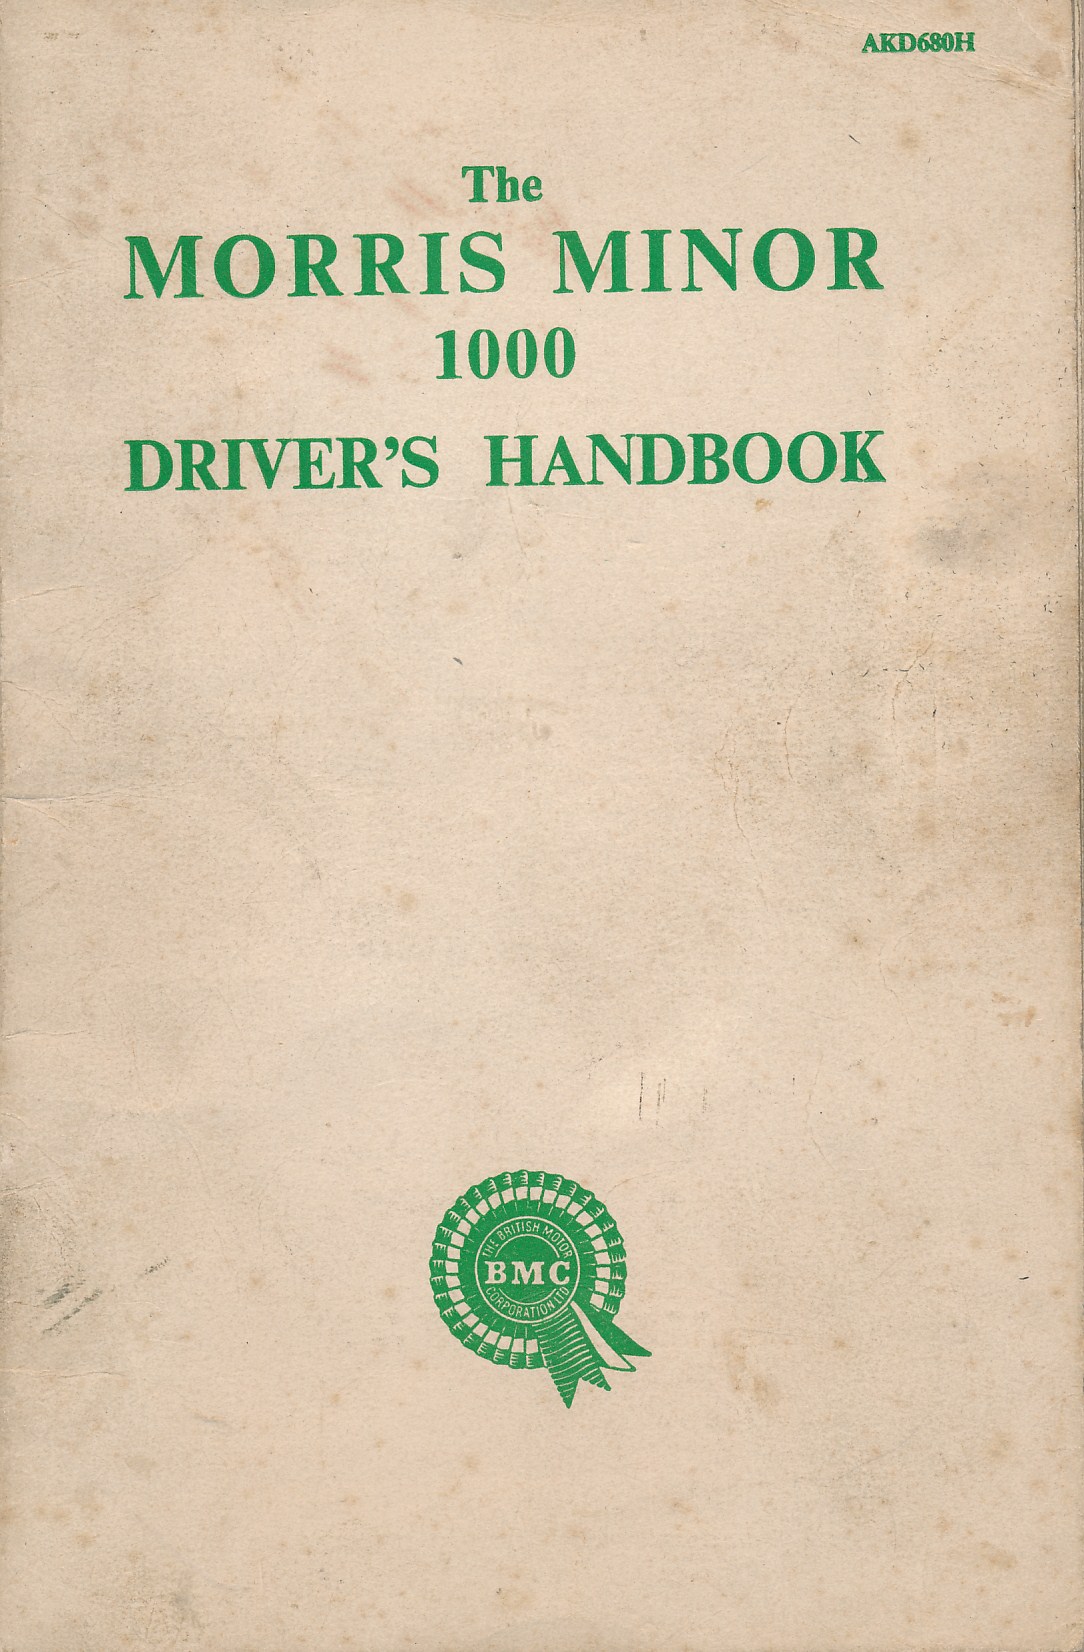 Morris Minor 1000 Driver's Handbook. Part No. AKD680H